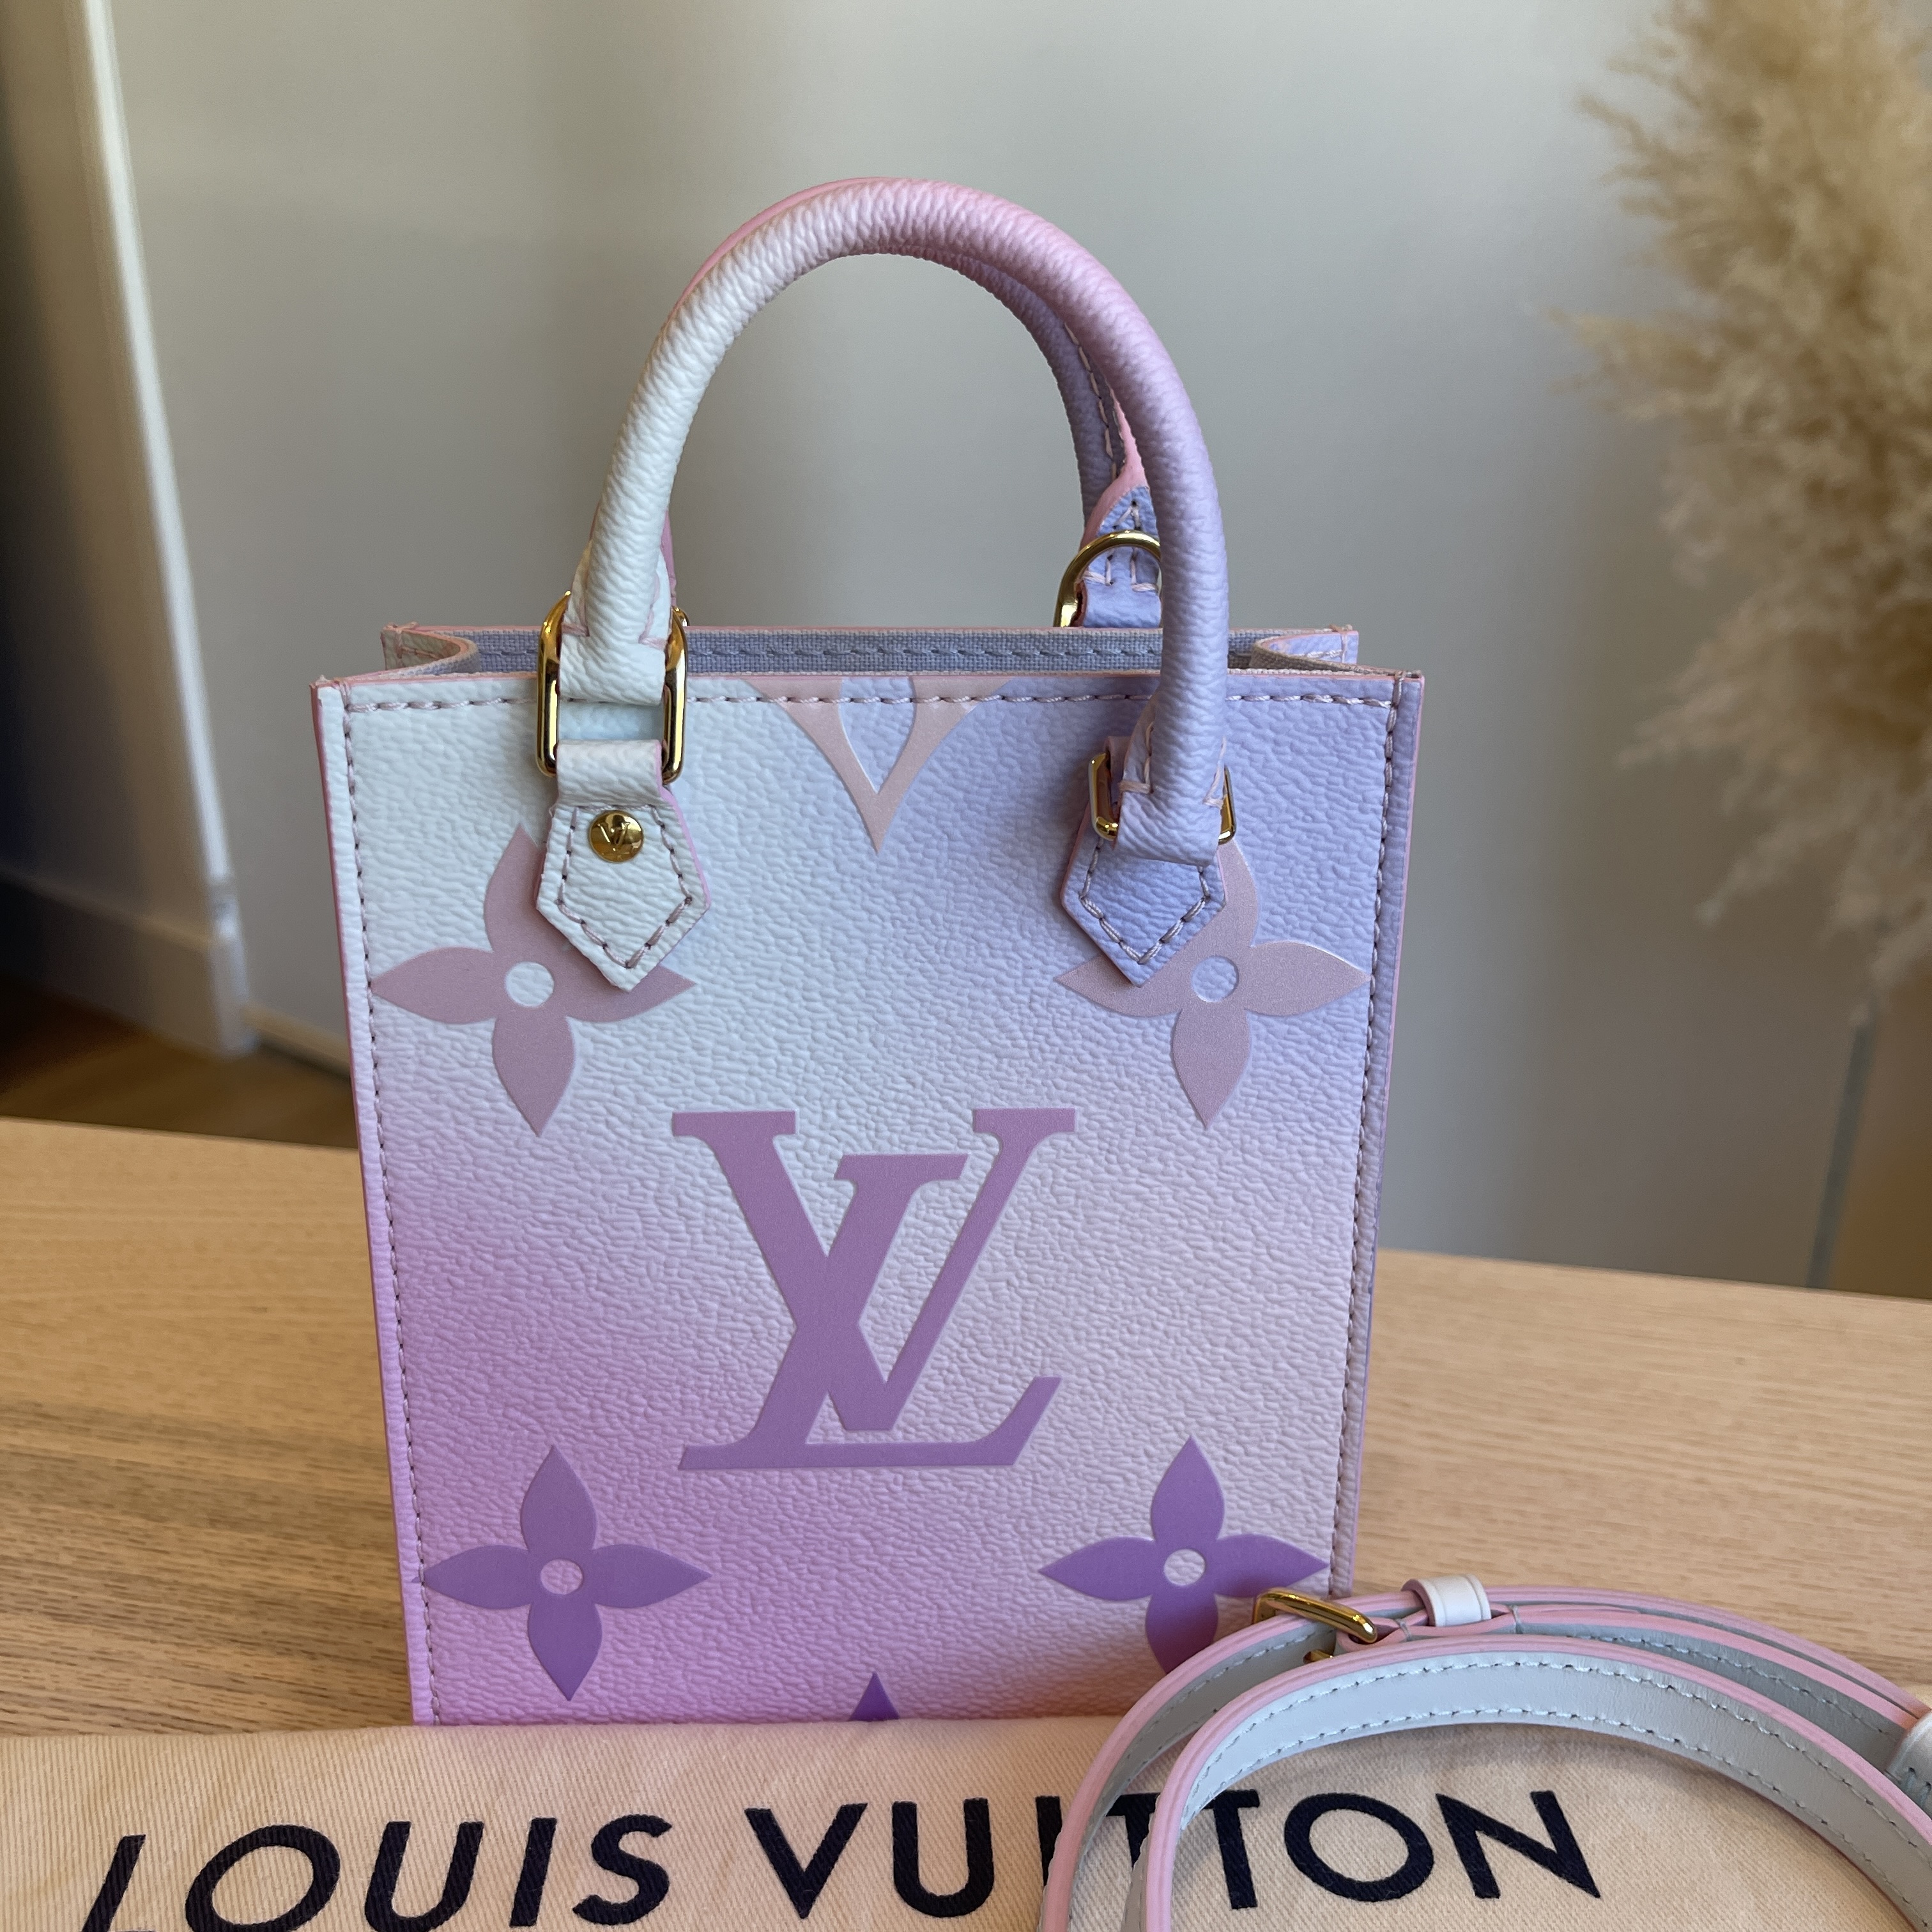 Louis Vuitton 2022 Spring In The City Petit Sac Plat w/ Box & Receipt